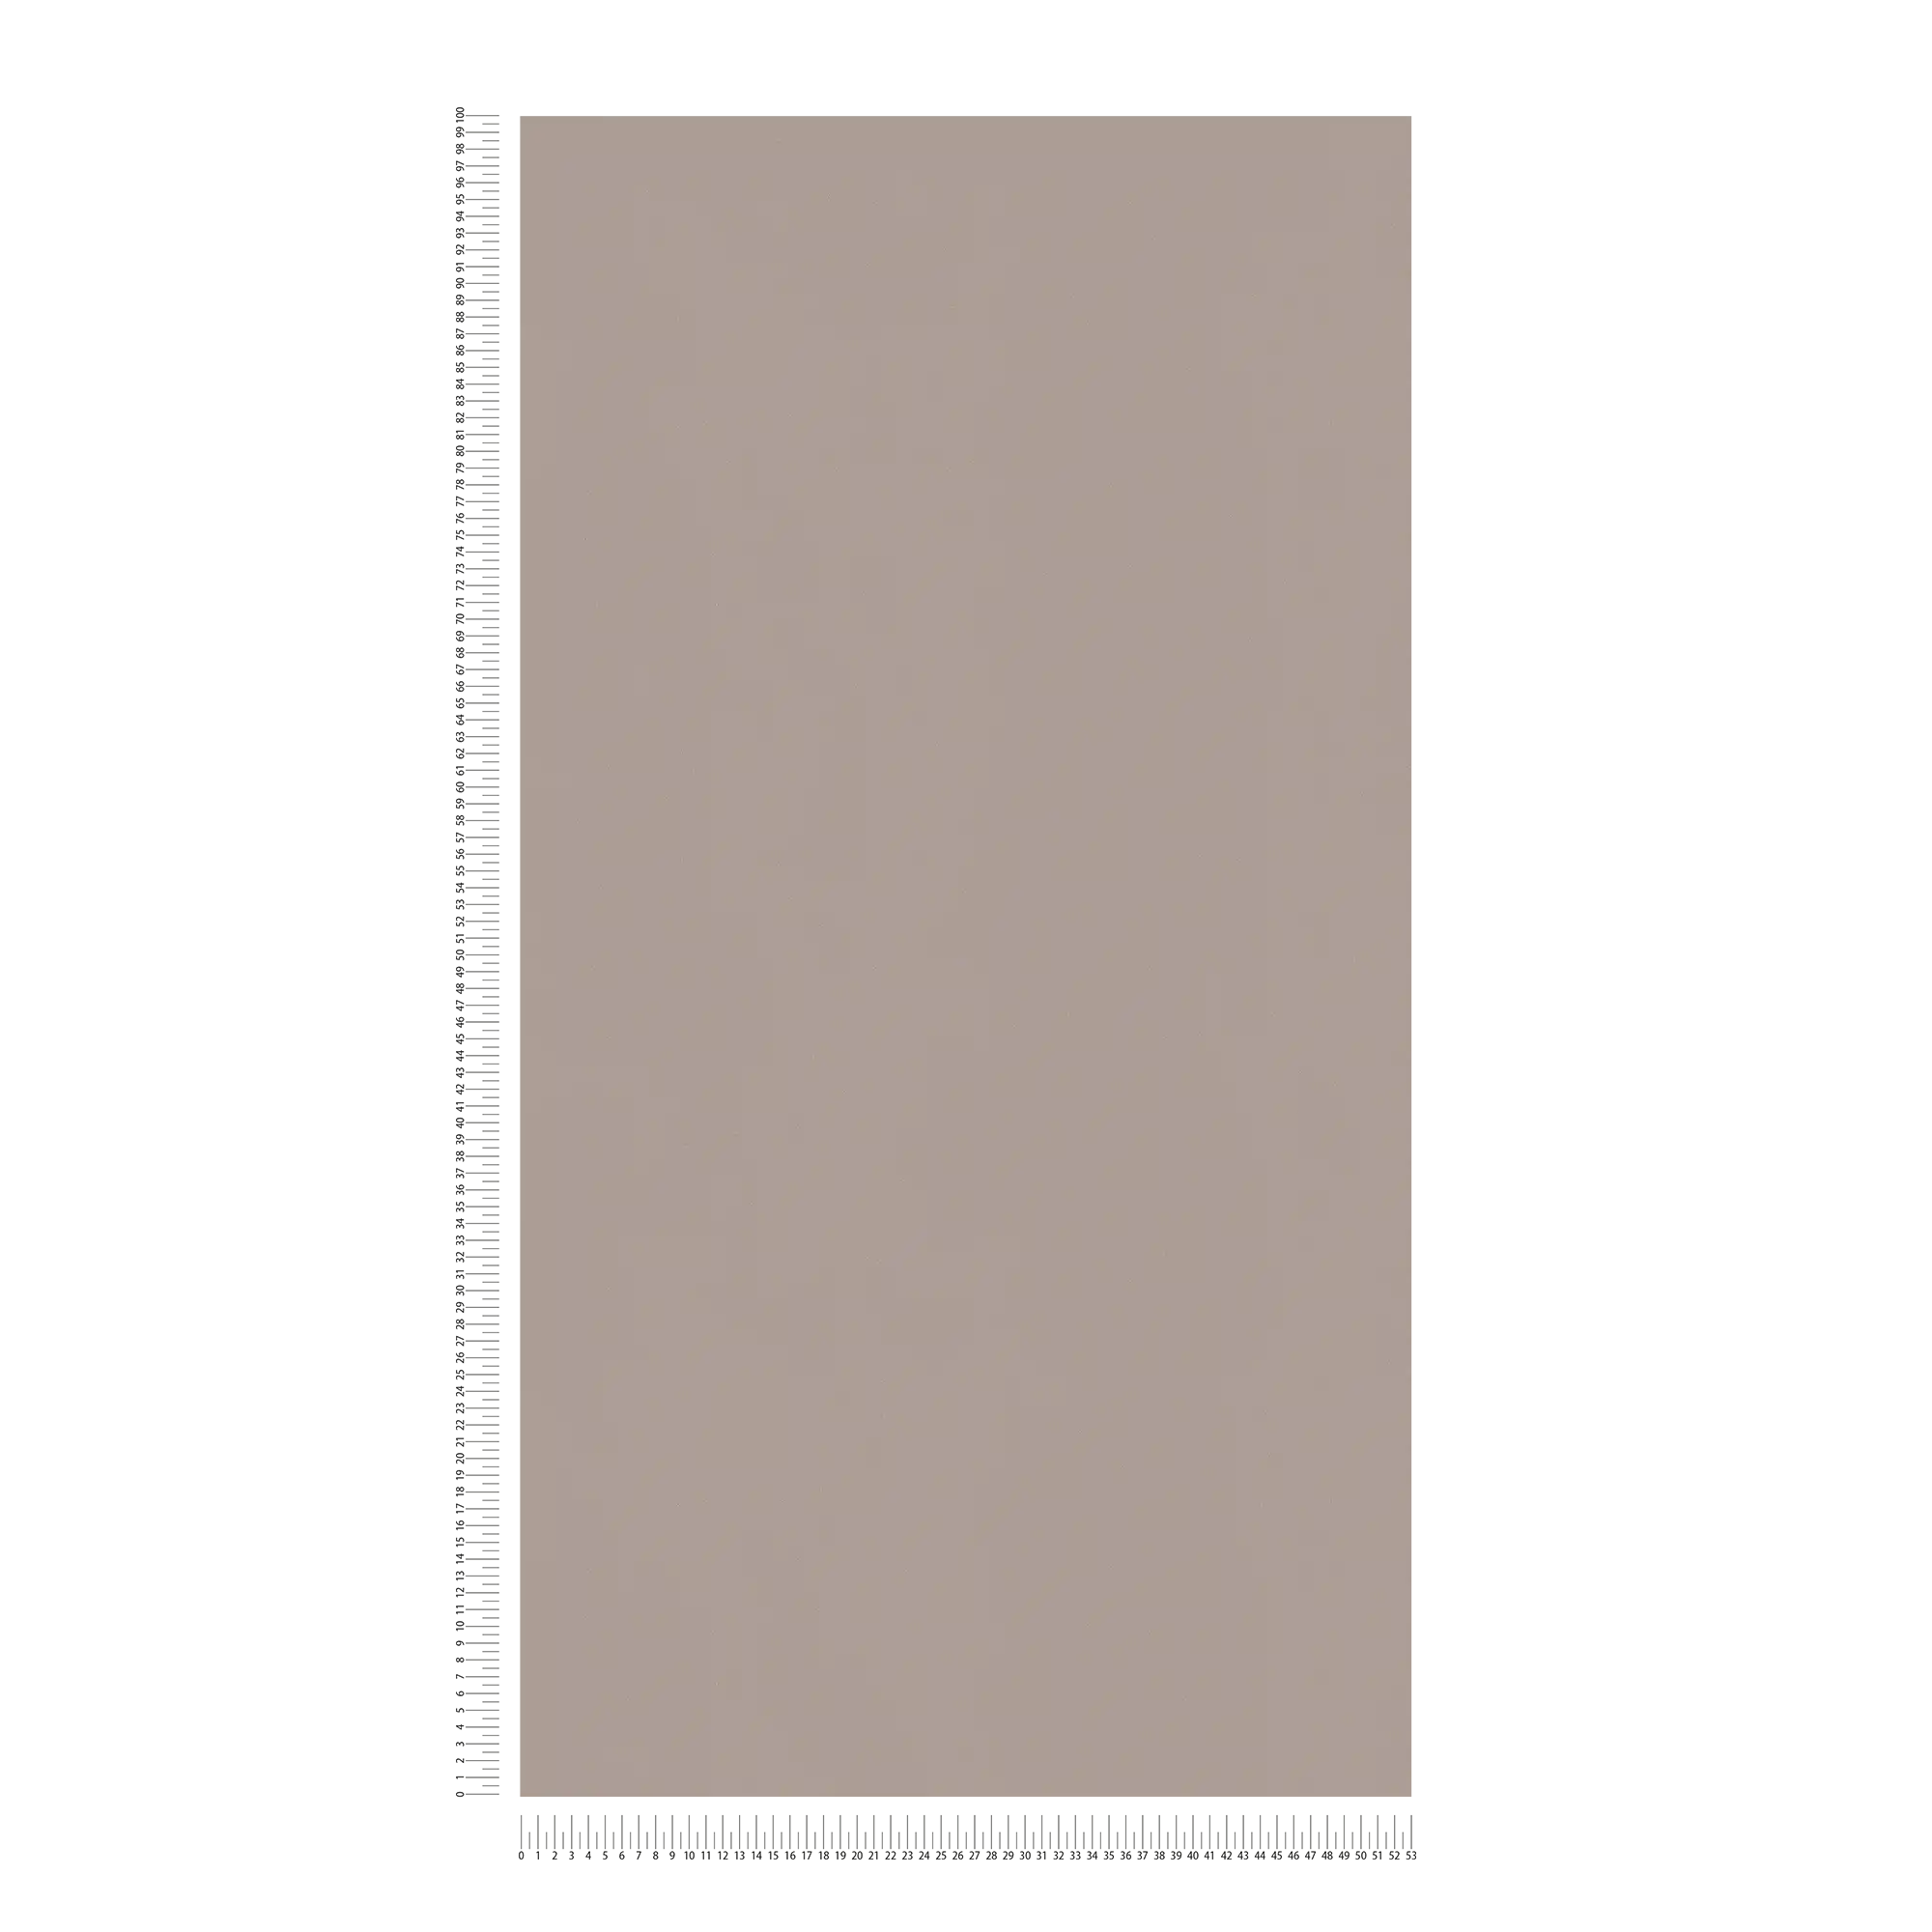             Plain wallpaper warm colour, textured - brown
        